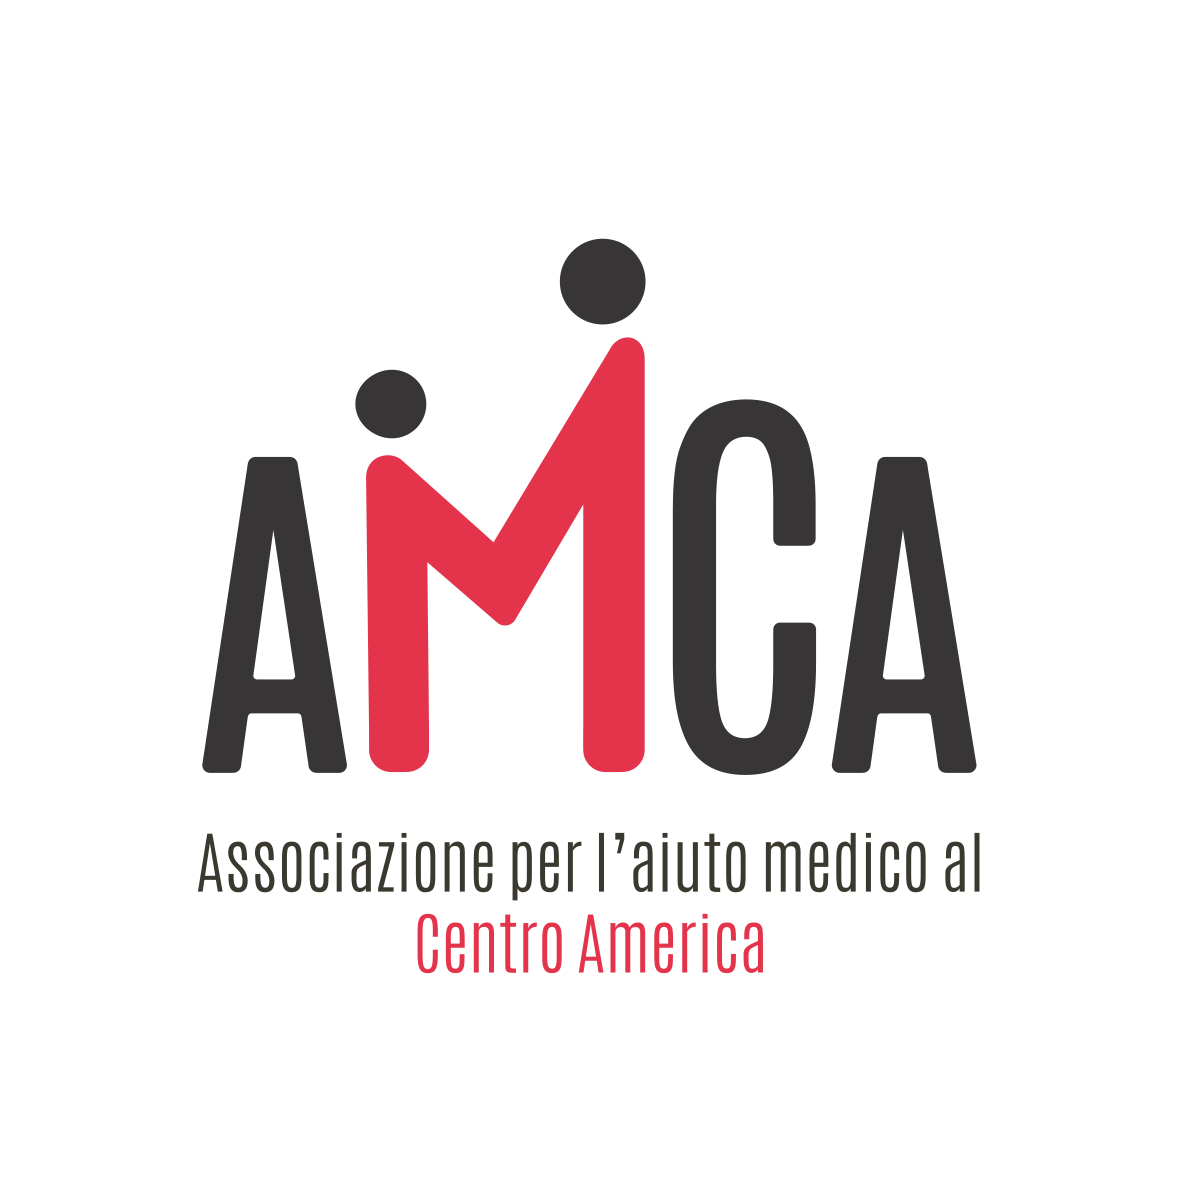 AMCA Logo Italienisch